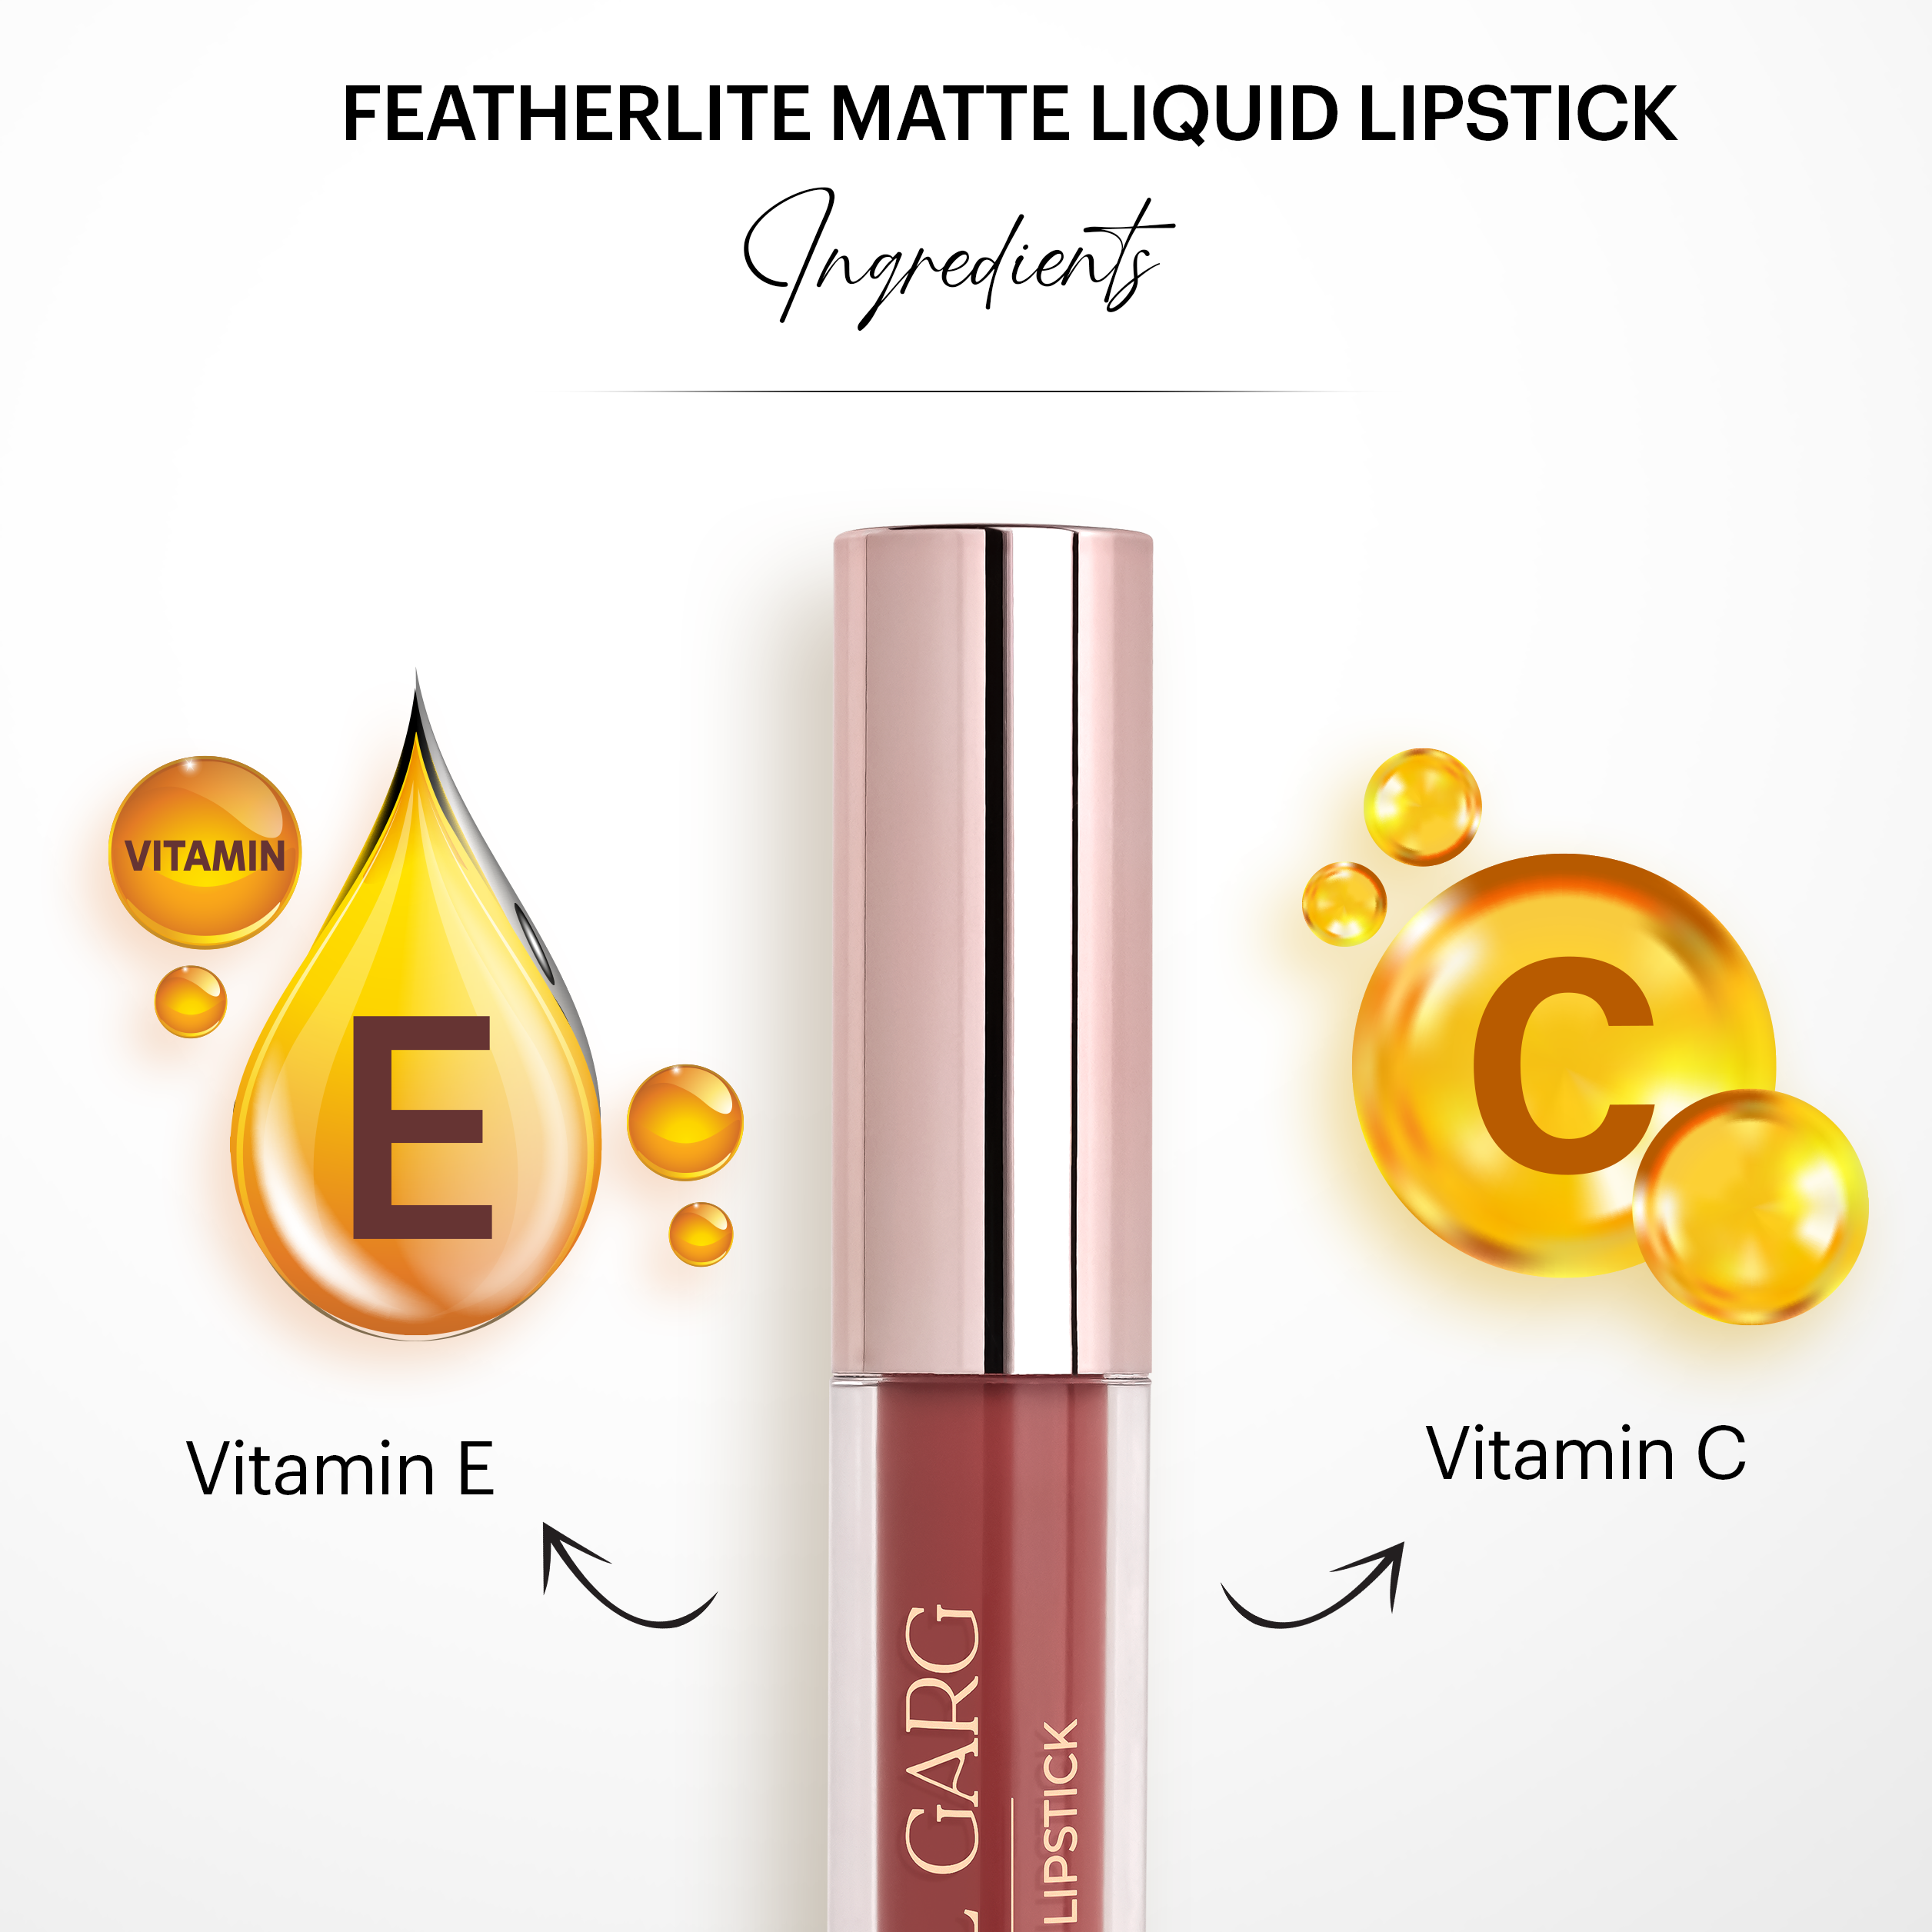 Featherlite Matte Liquid Lipstick: Dream 21